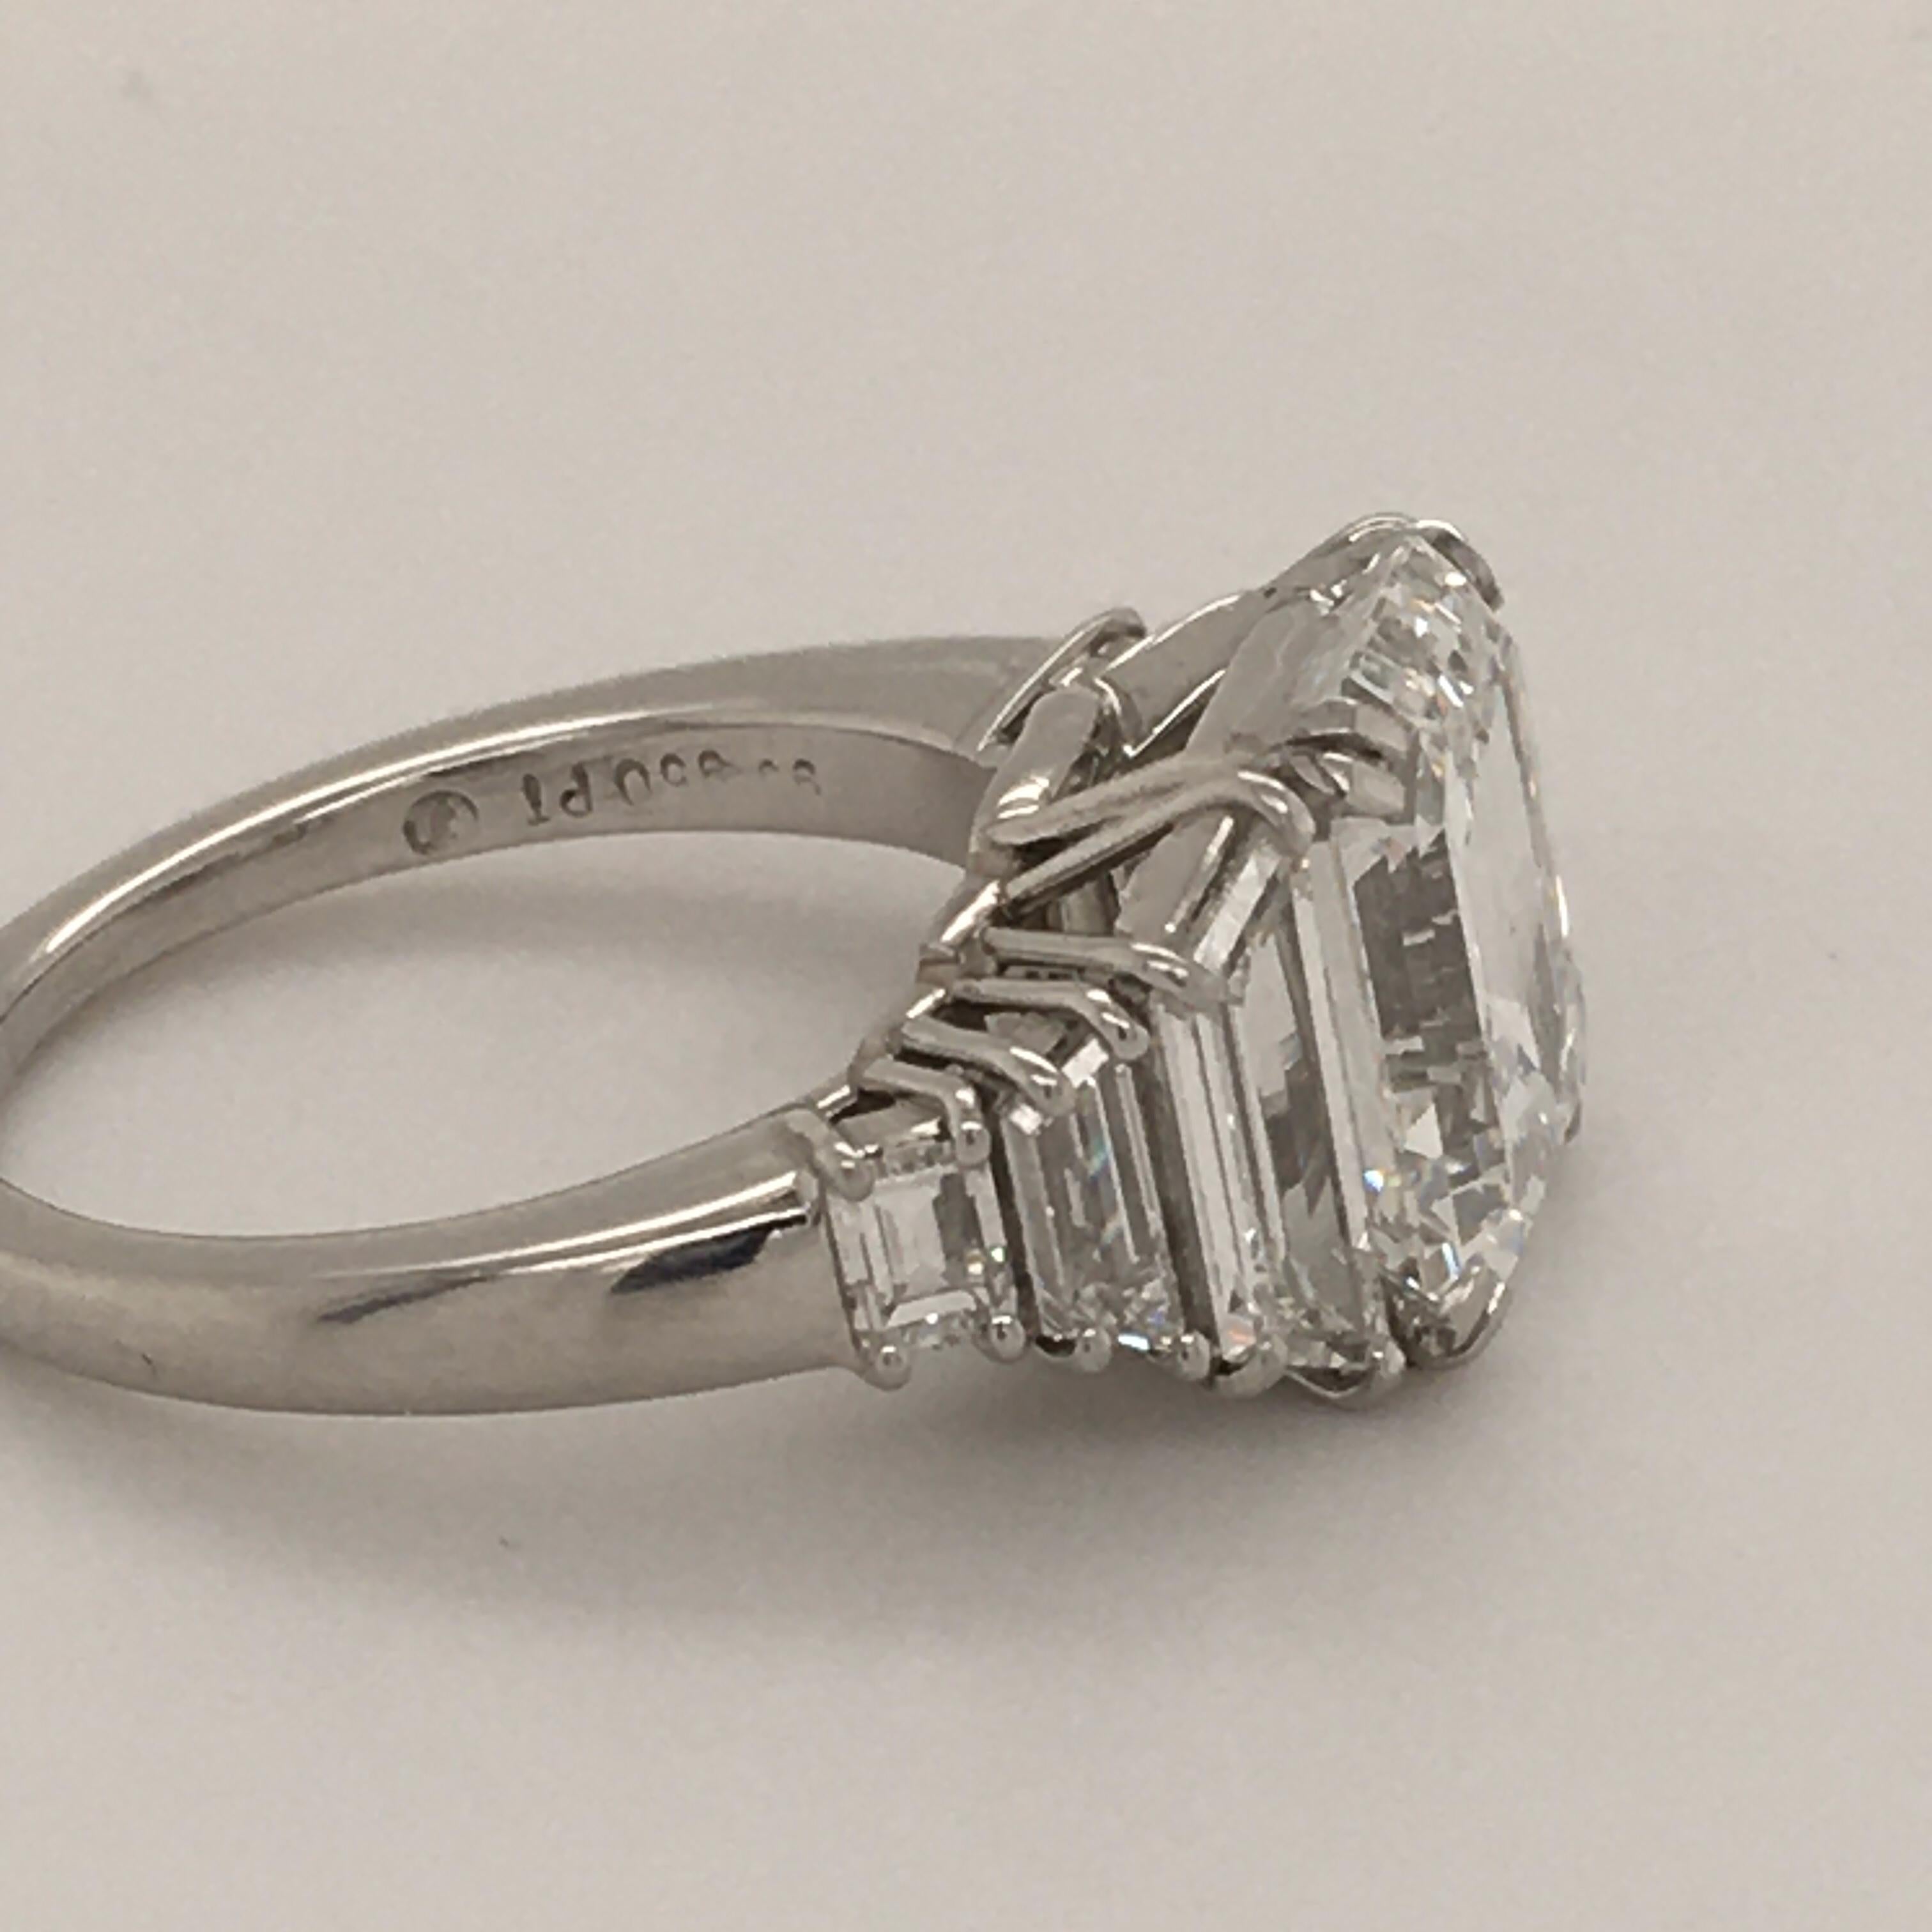 Harry Winston GIA Certified 4.63 Carat Emerald Cut Diamond Ring in Platinum 950 For Sale 2